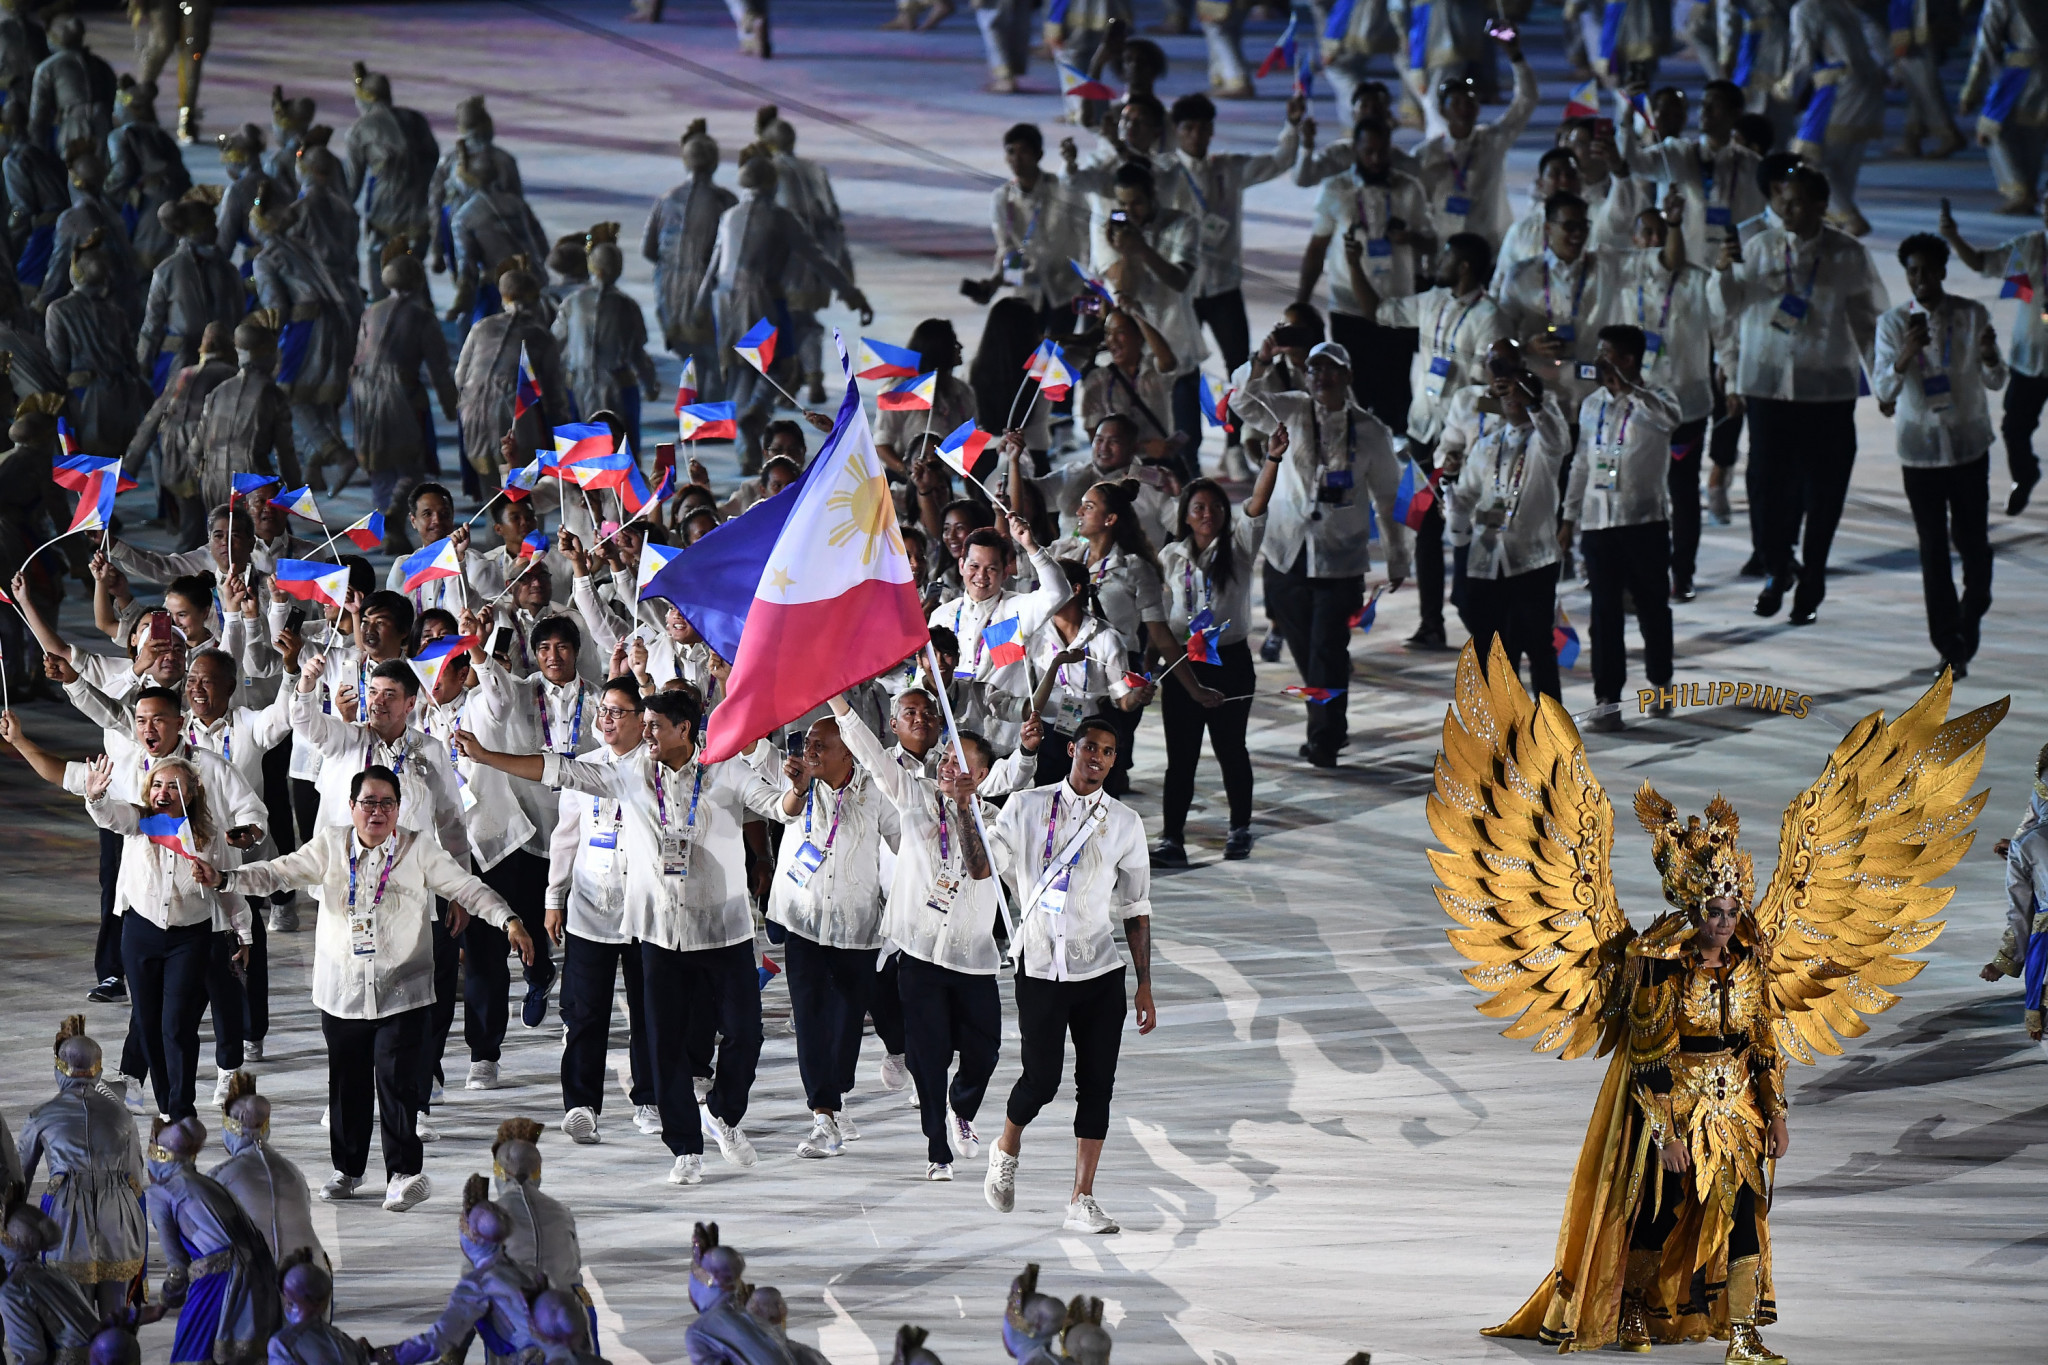 Philippines karateka face coronavirus-related visa issues ahead of Olympic qualifying tournament